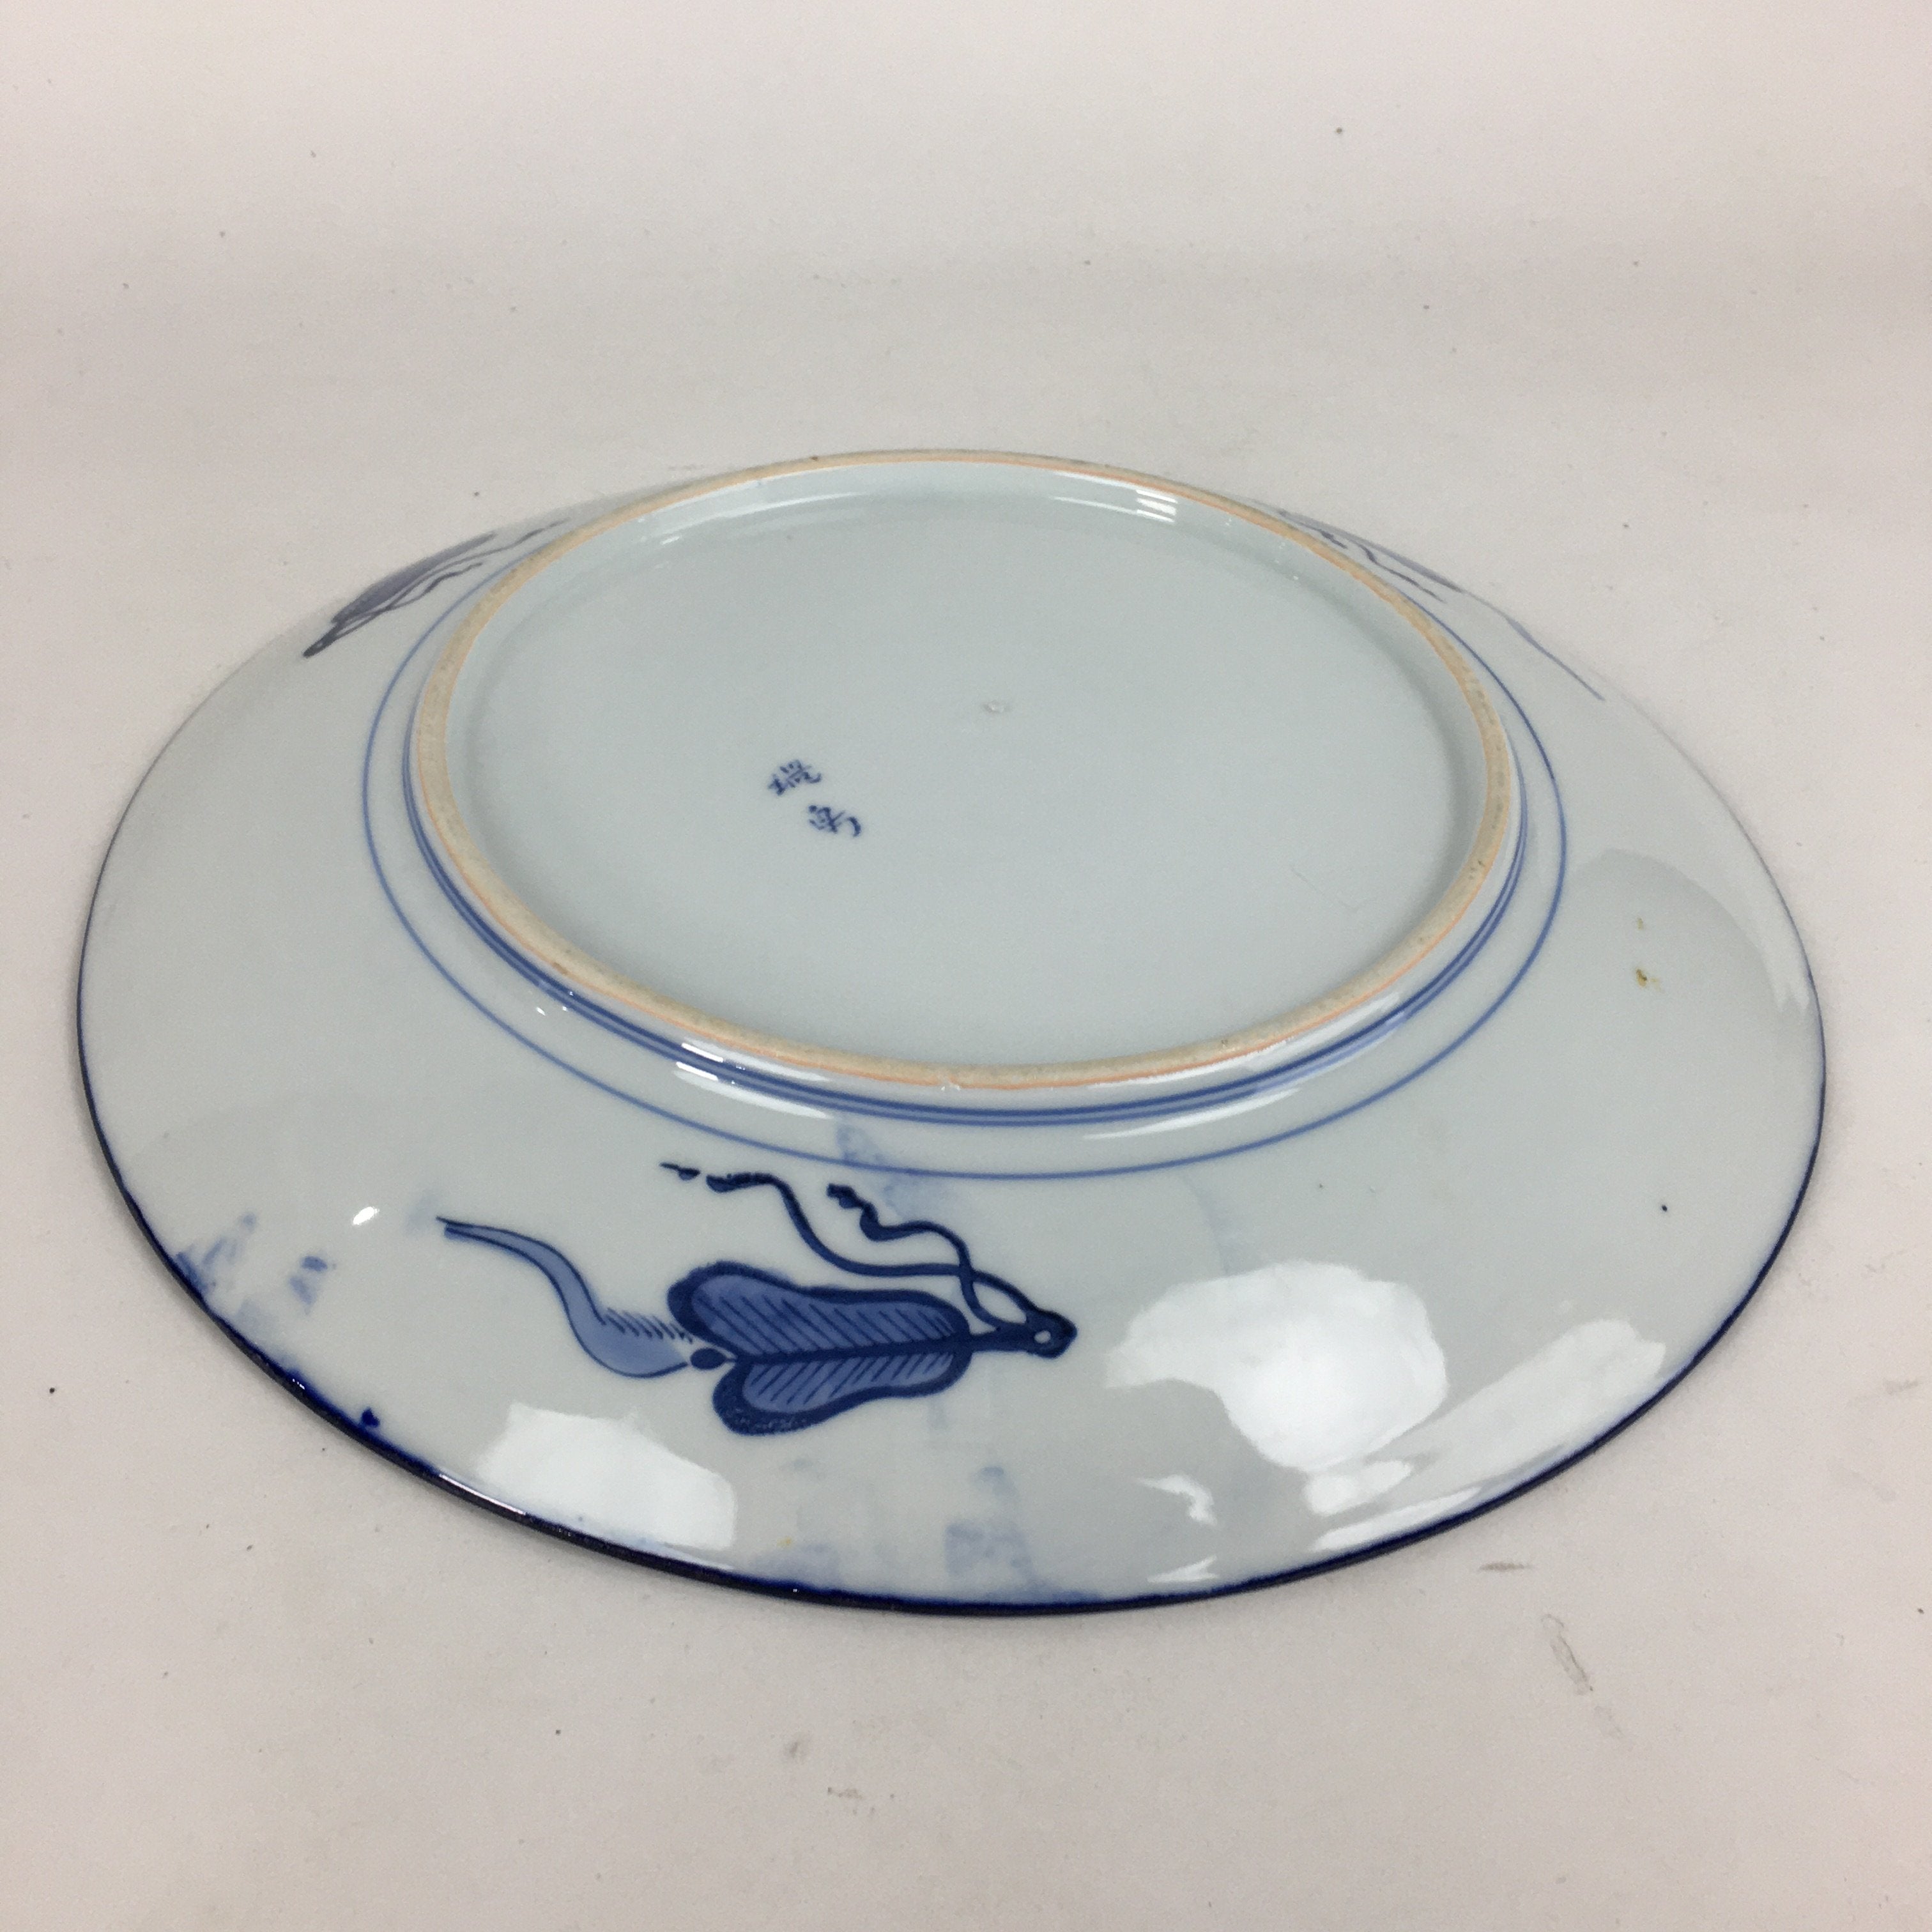 Japanese Porcelain Large Plate Centerpiece Vtg Round Chinese Children 34cm PP645